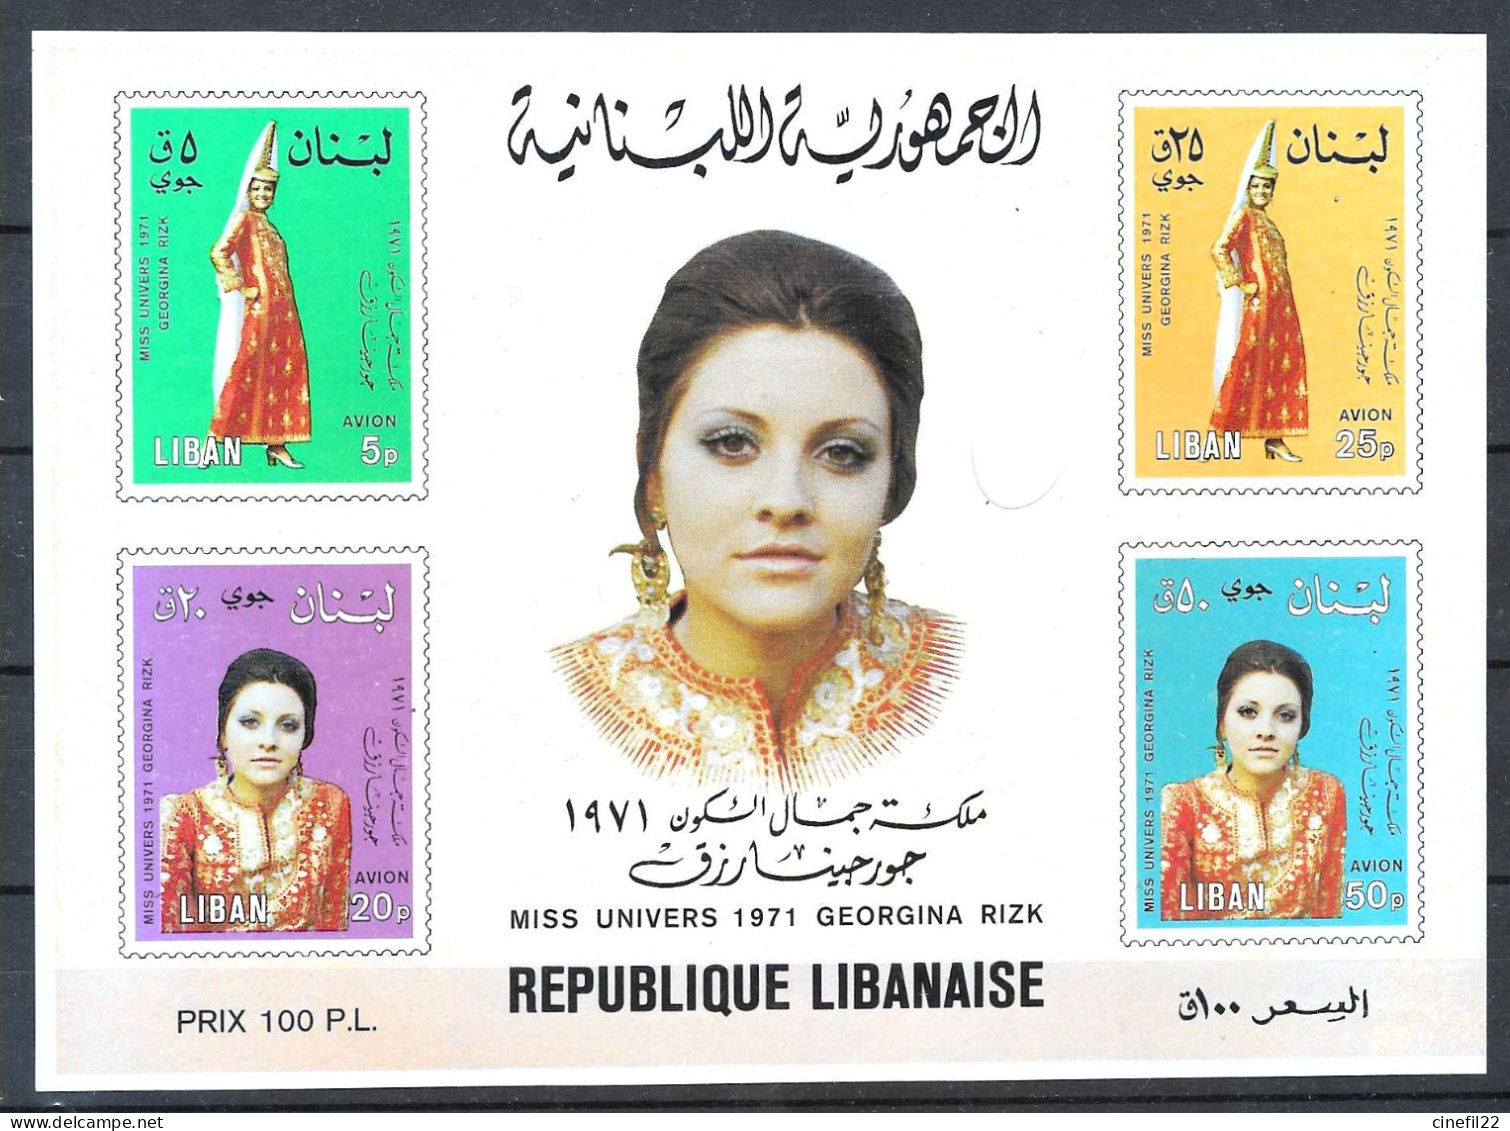 Liban - Lebanon, S/S Georgina Rizk Miss Univers, Mode, Mannequin, Cinema, 1974 - Lebanon